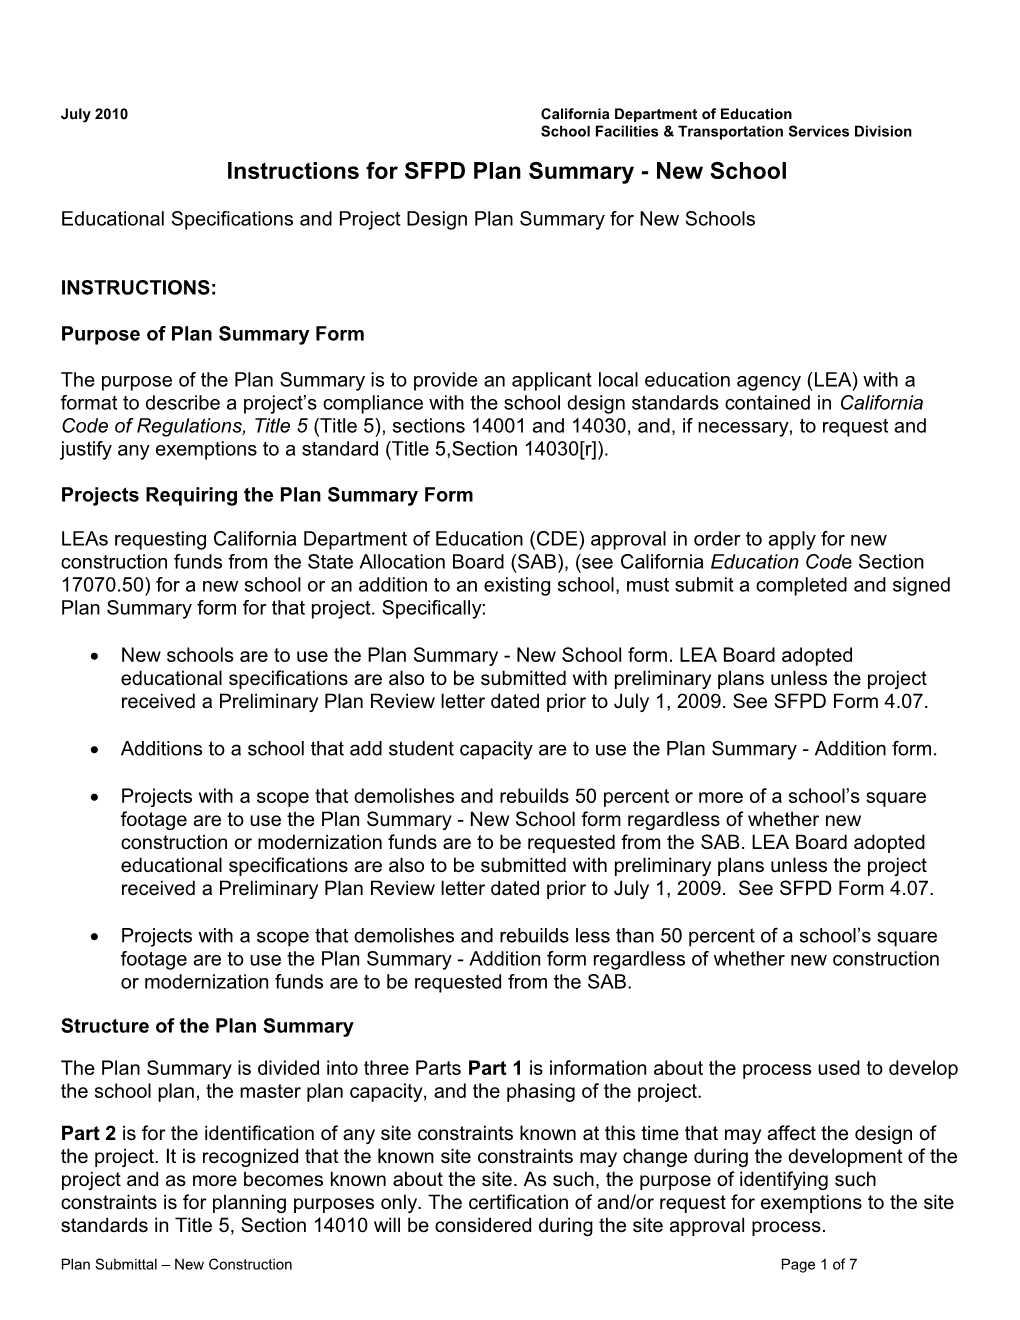 SFPD Plan Summary - School Facilities (CA Dept of Education)